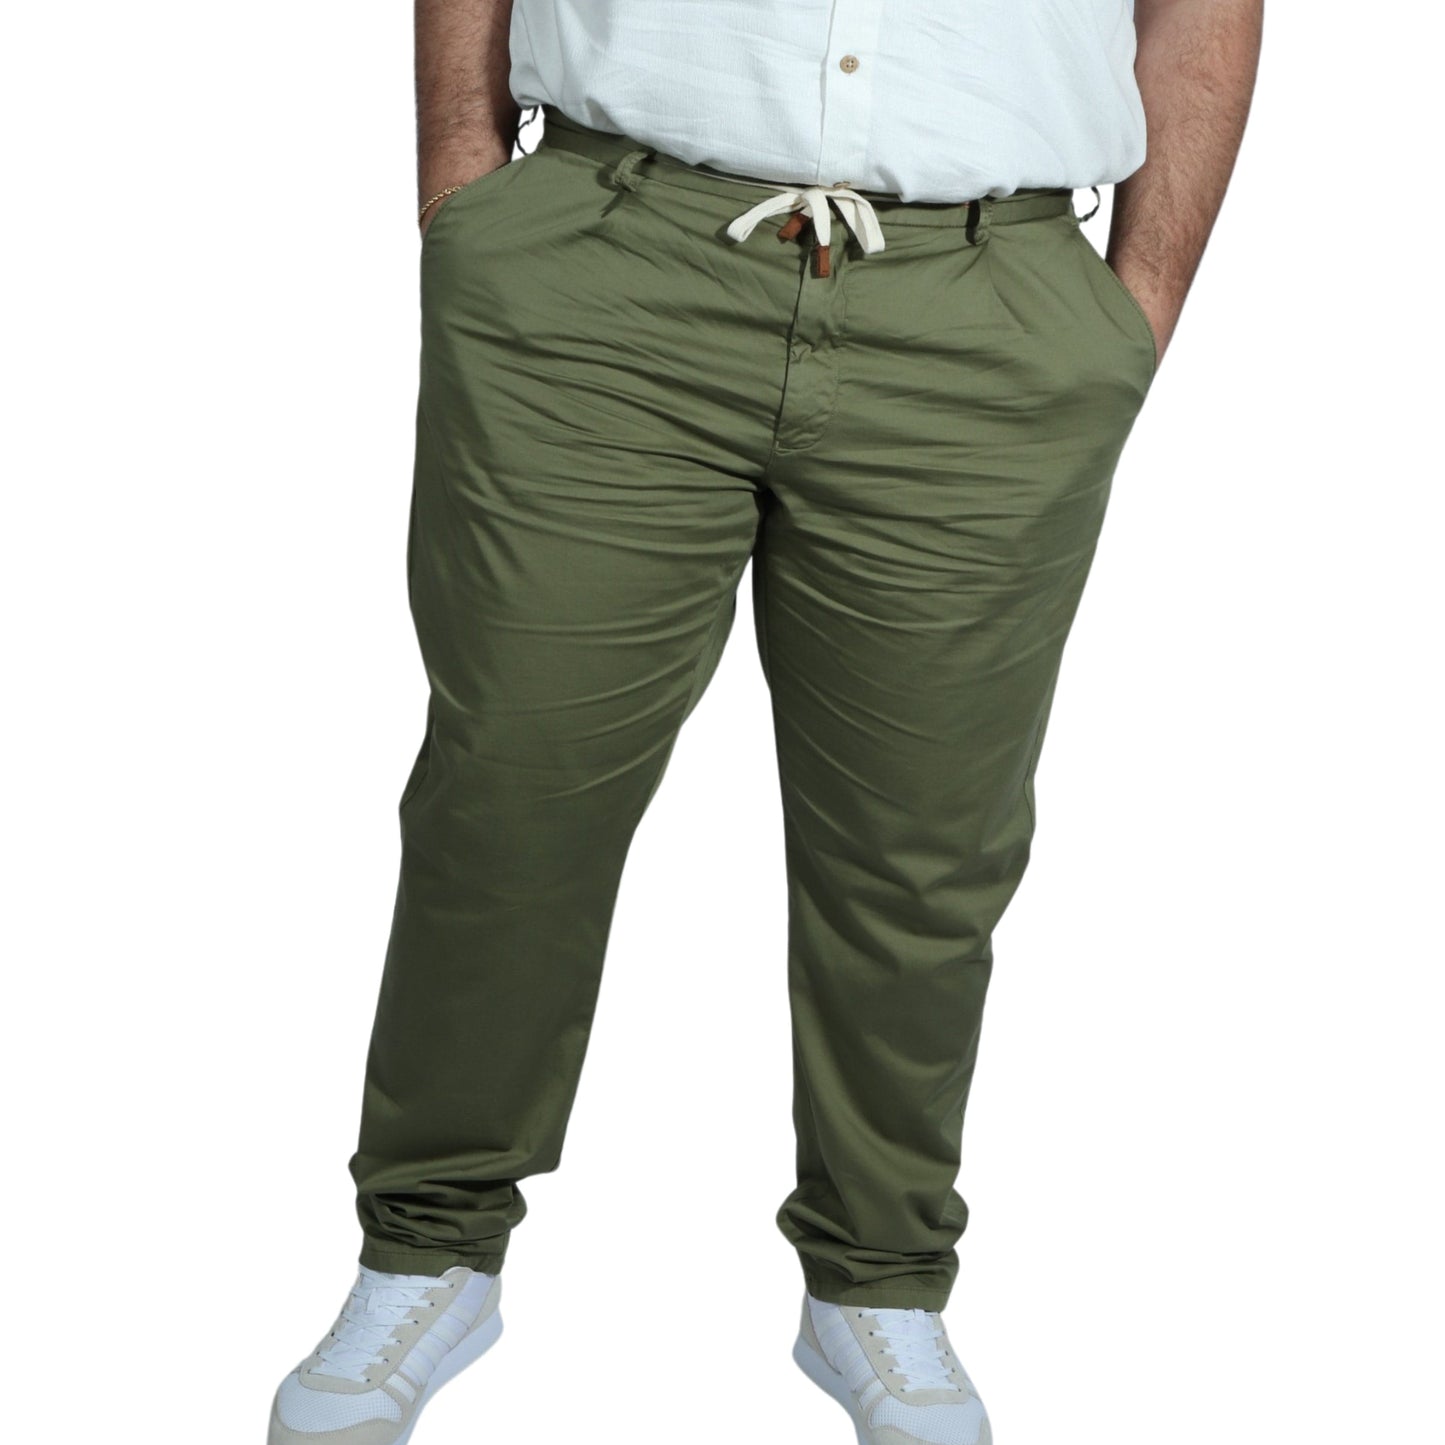 CBR Mens Bottoms XL / Green CBR - Drawstring Pants